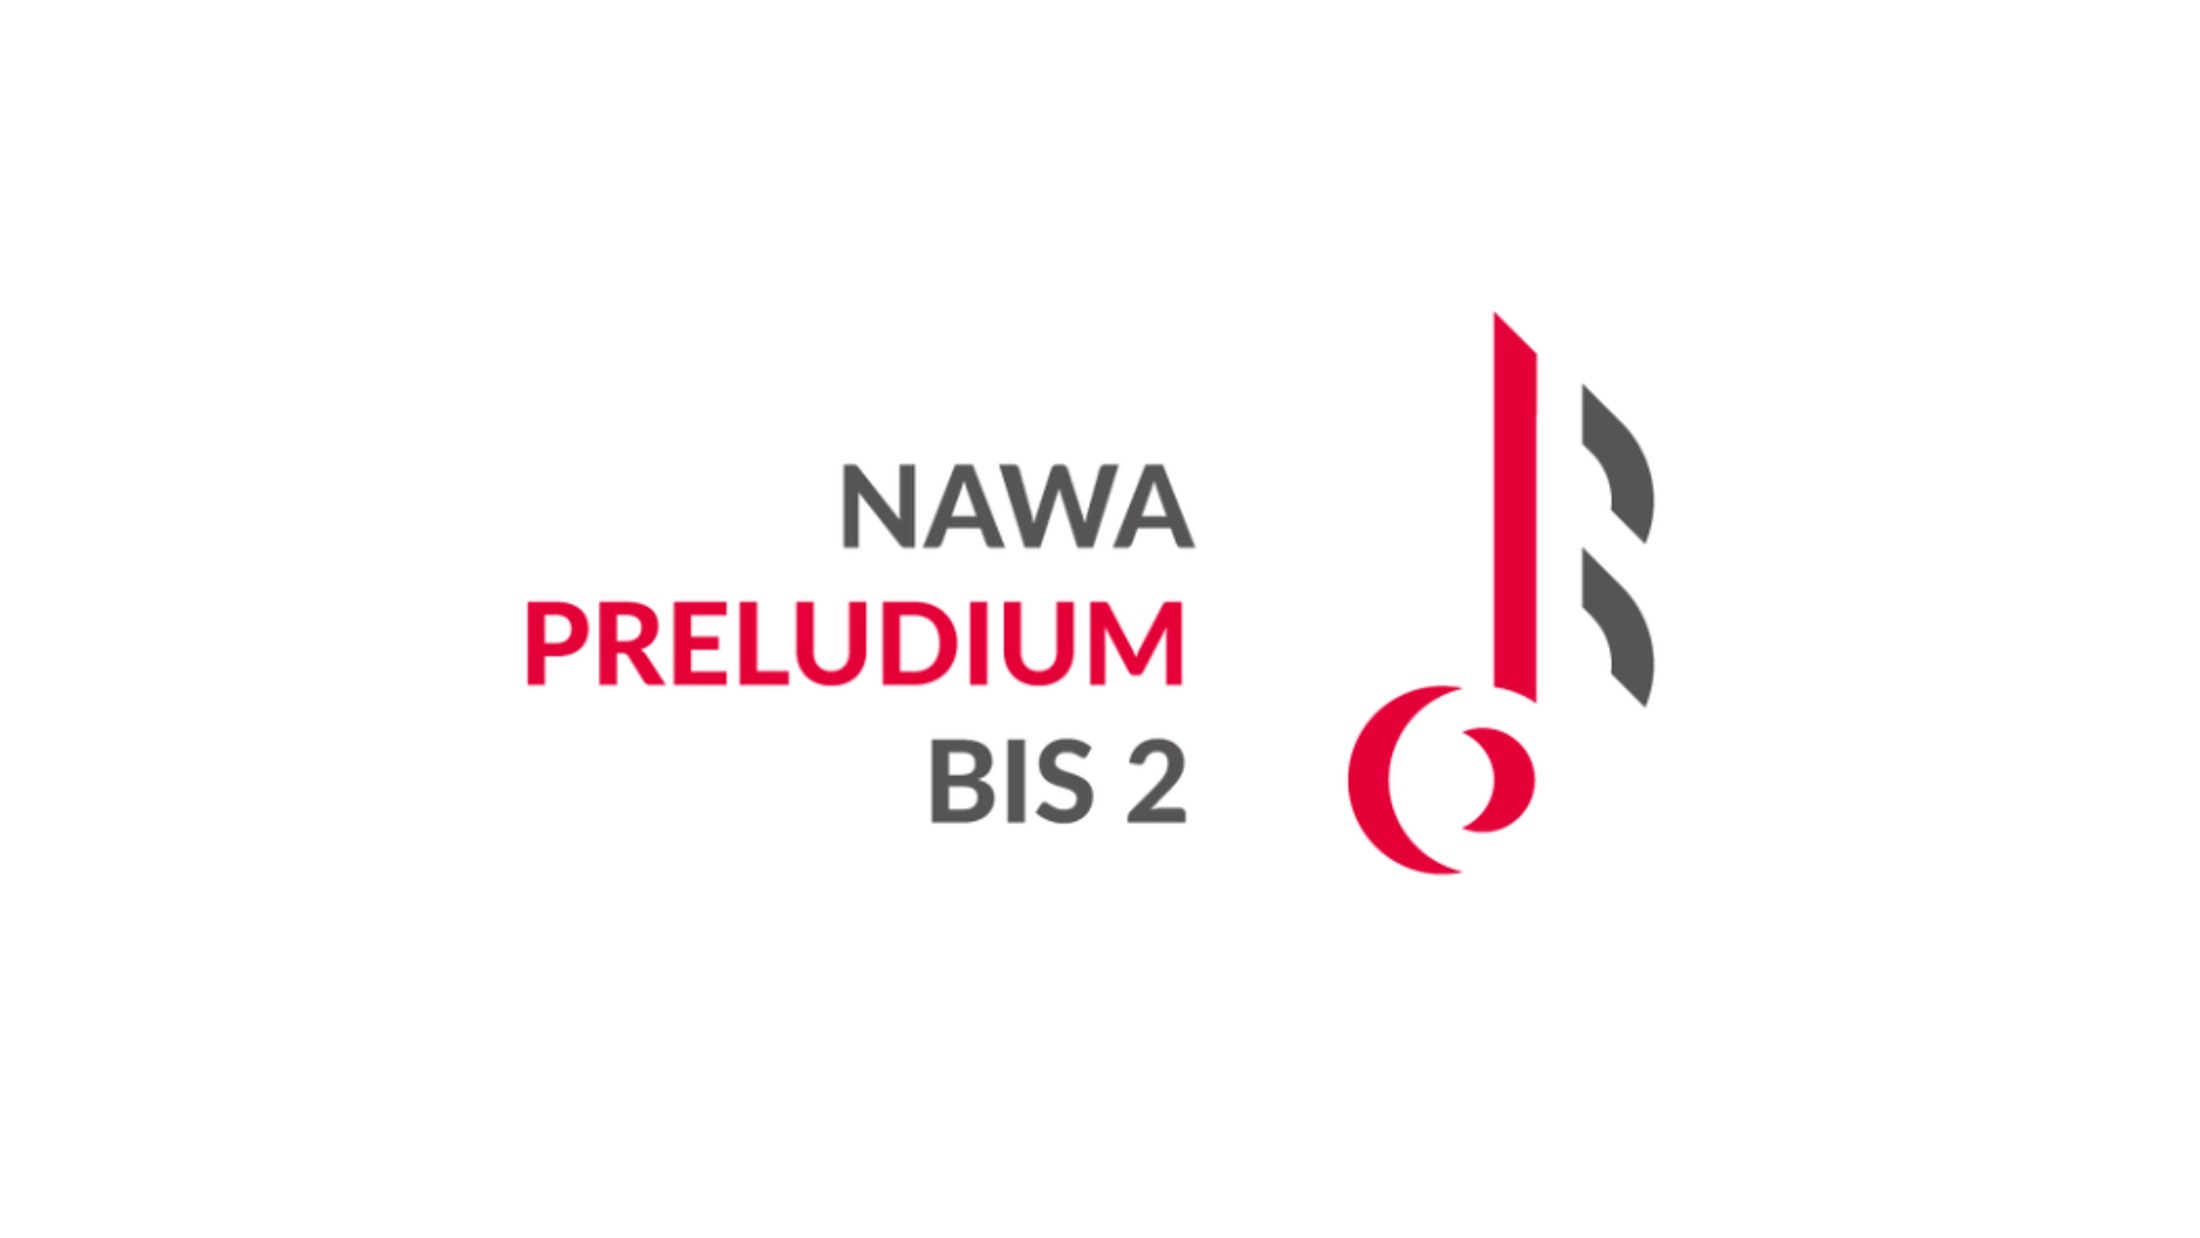 NAWA PRELUDIUM BIS 2 Call for proposals